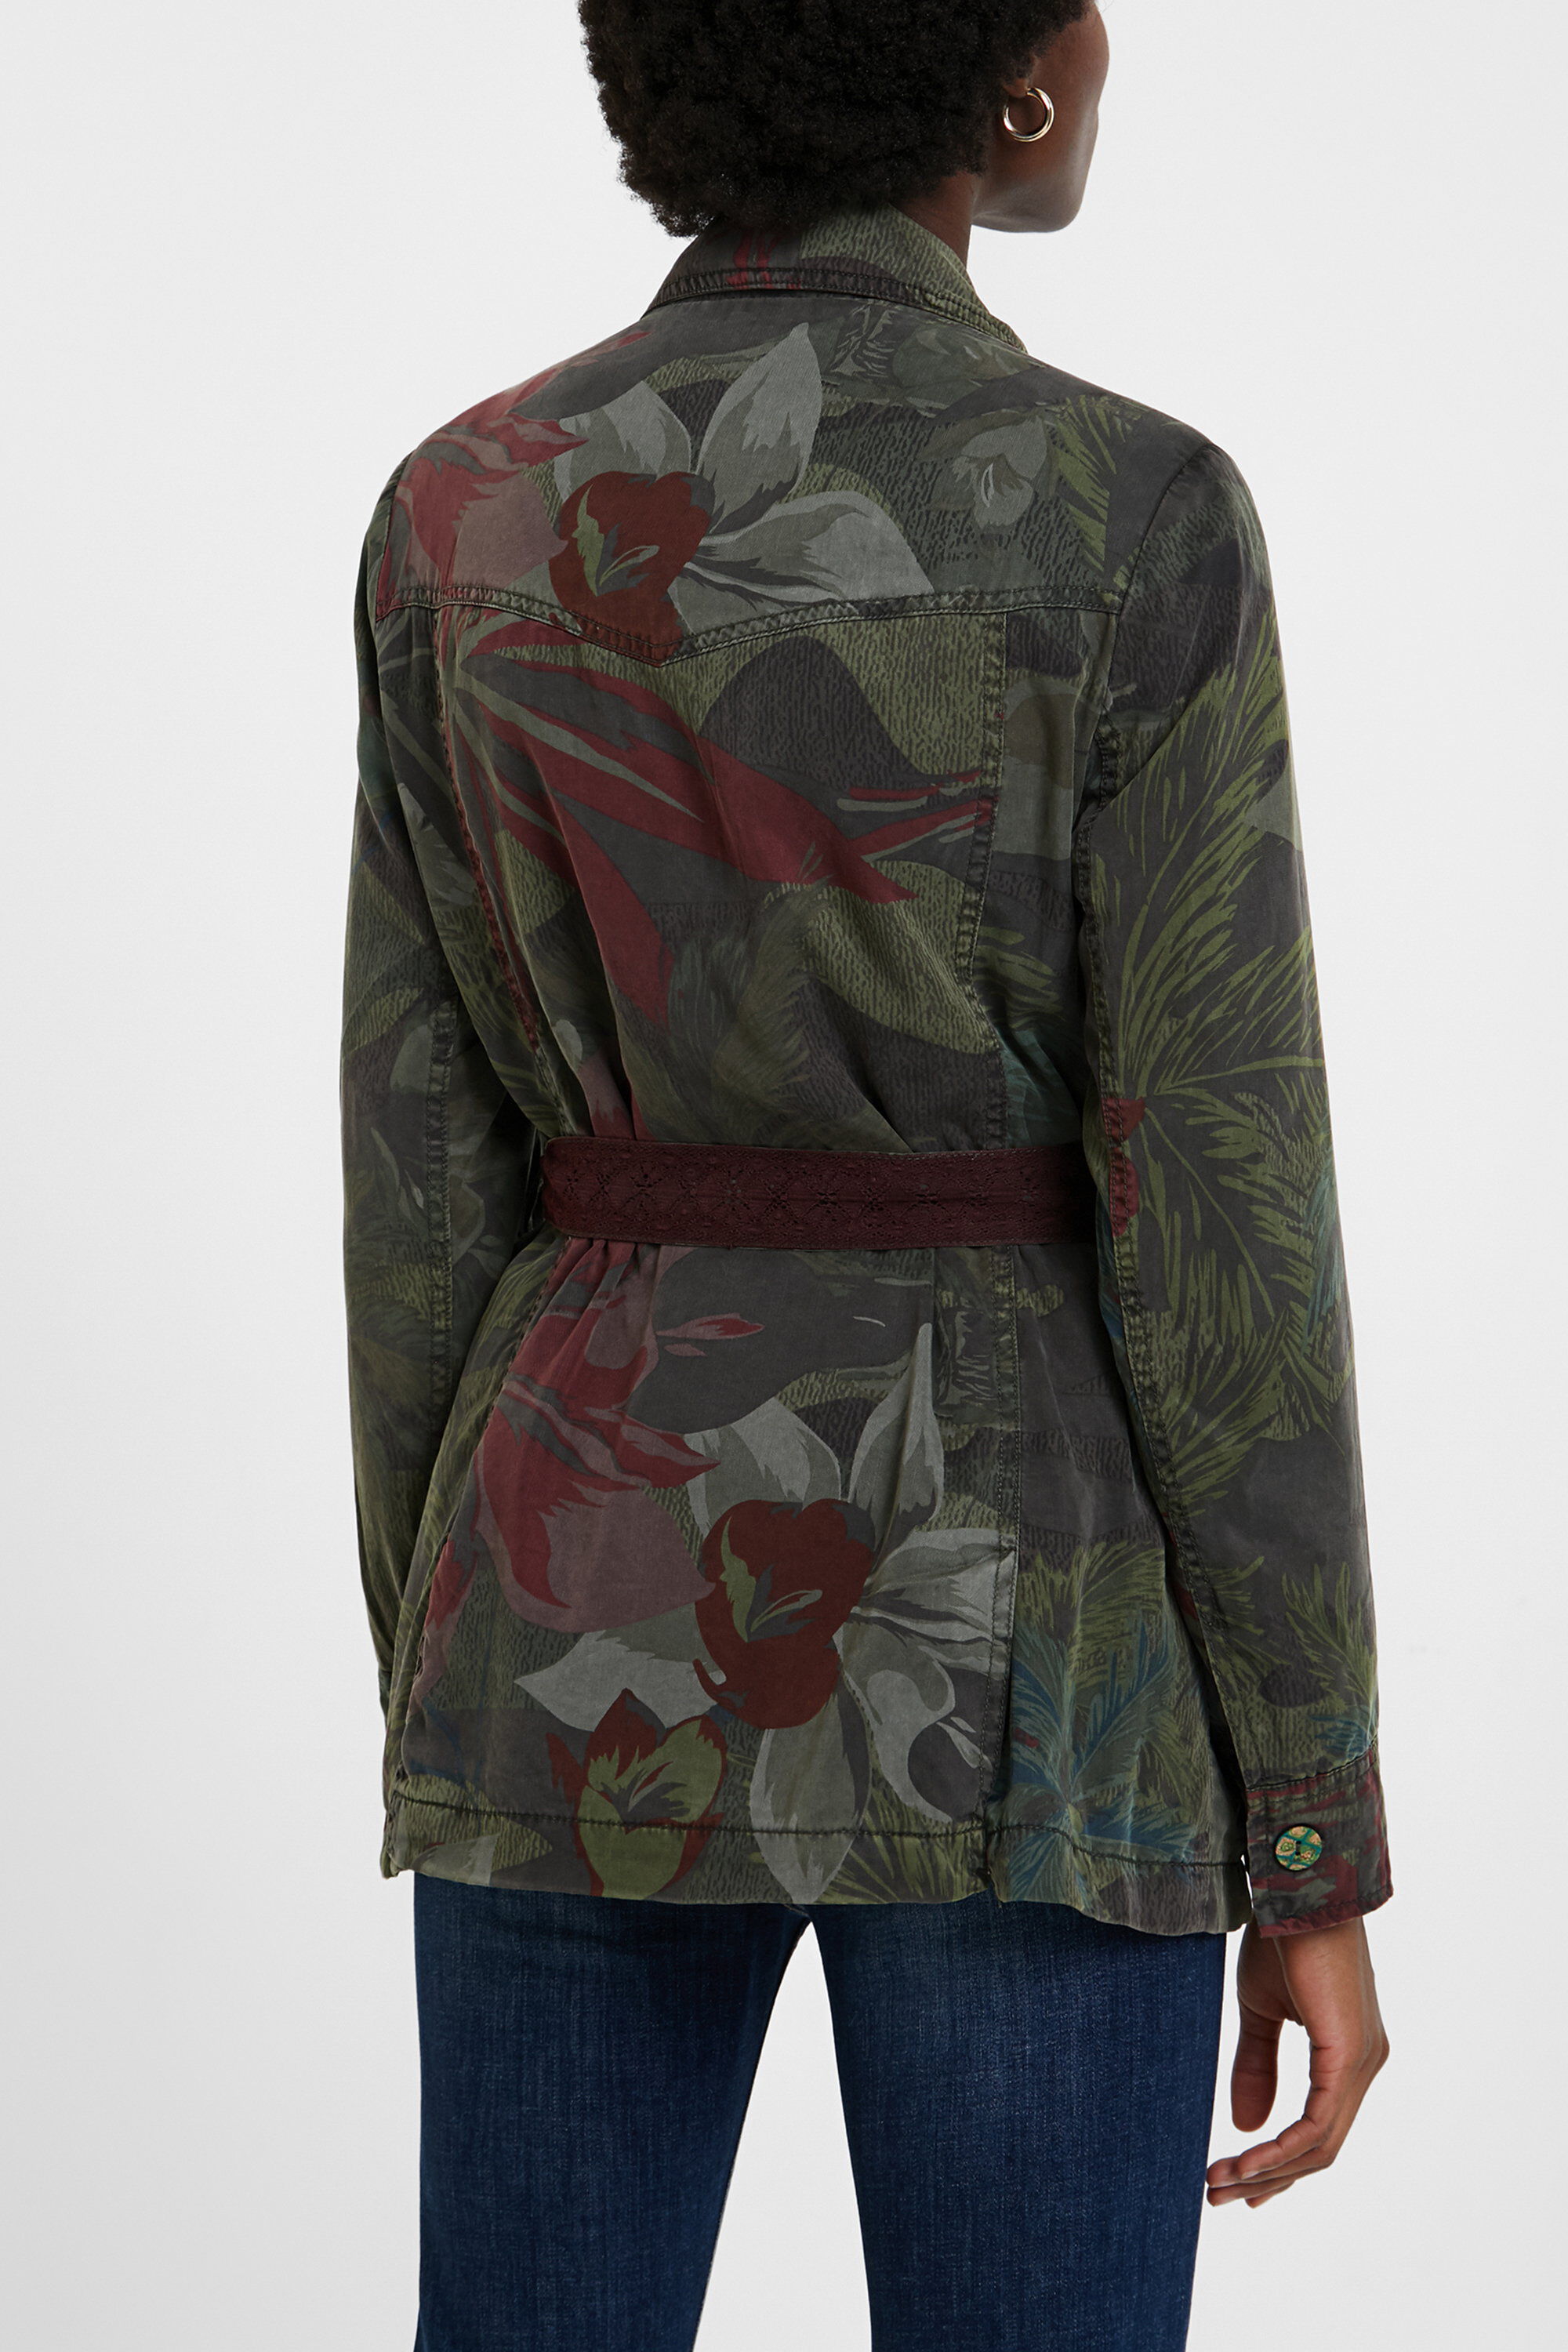 Camoflower military jacket | Desigual.com